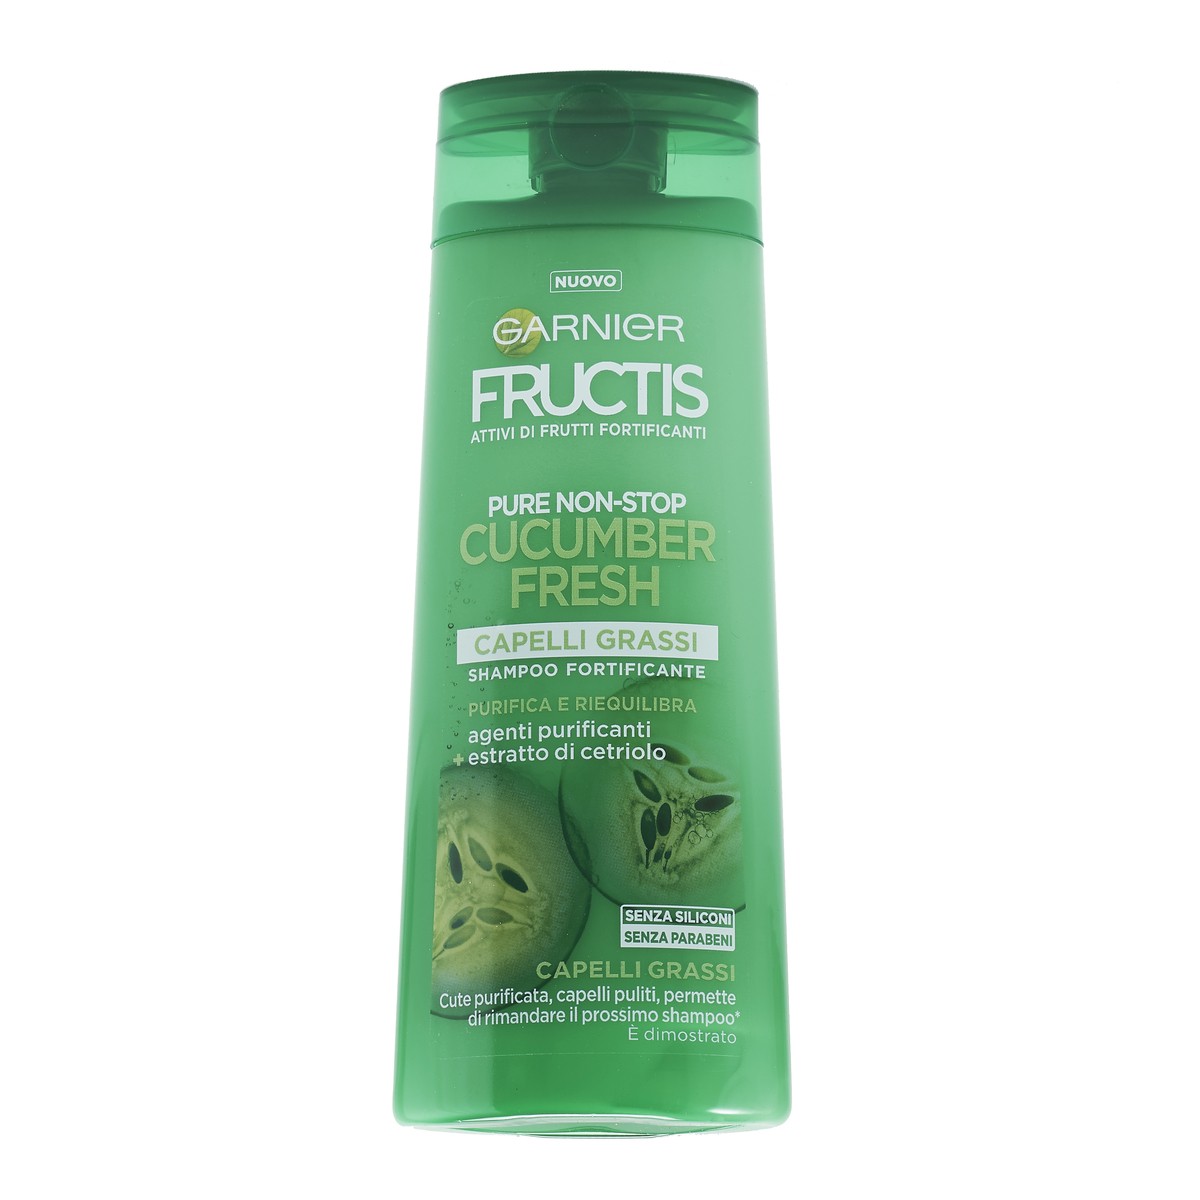 Garnier Fructis Shampoo fortificante Cucumber Fresh